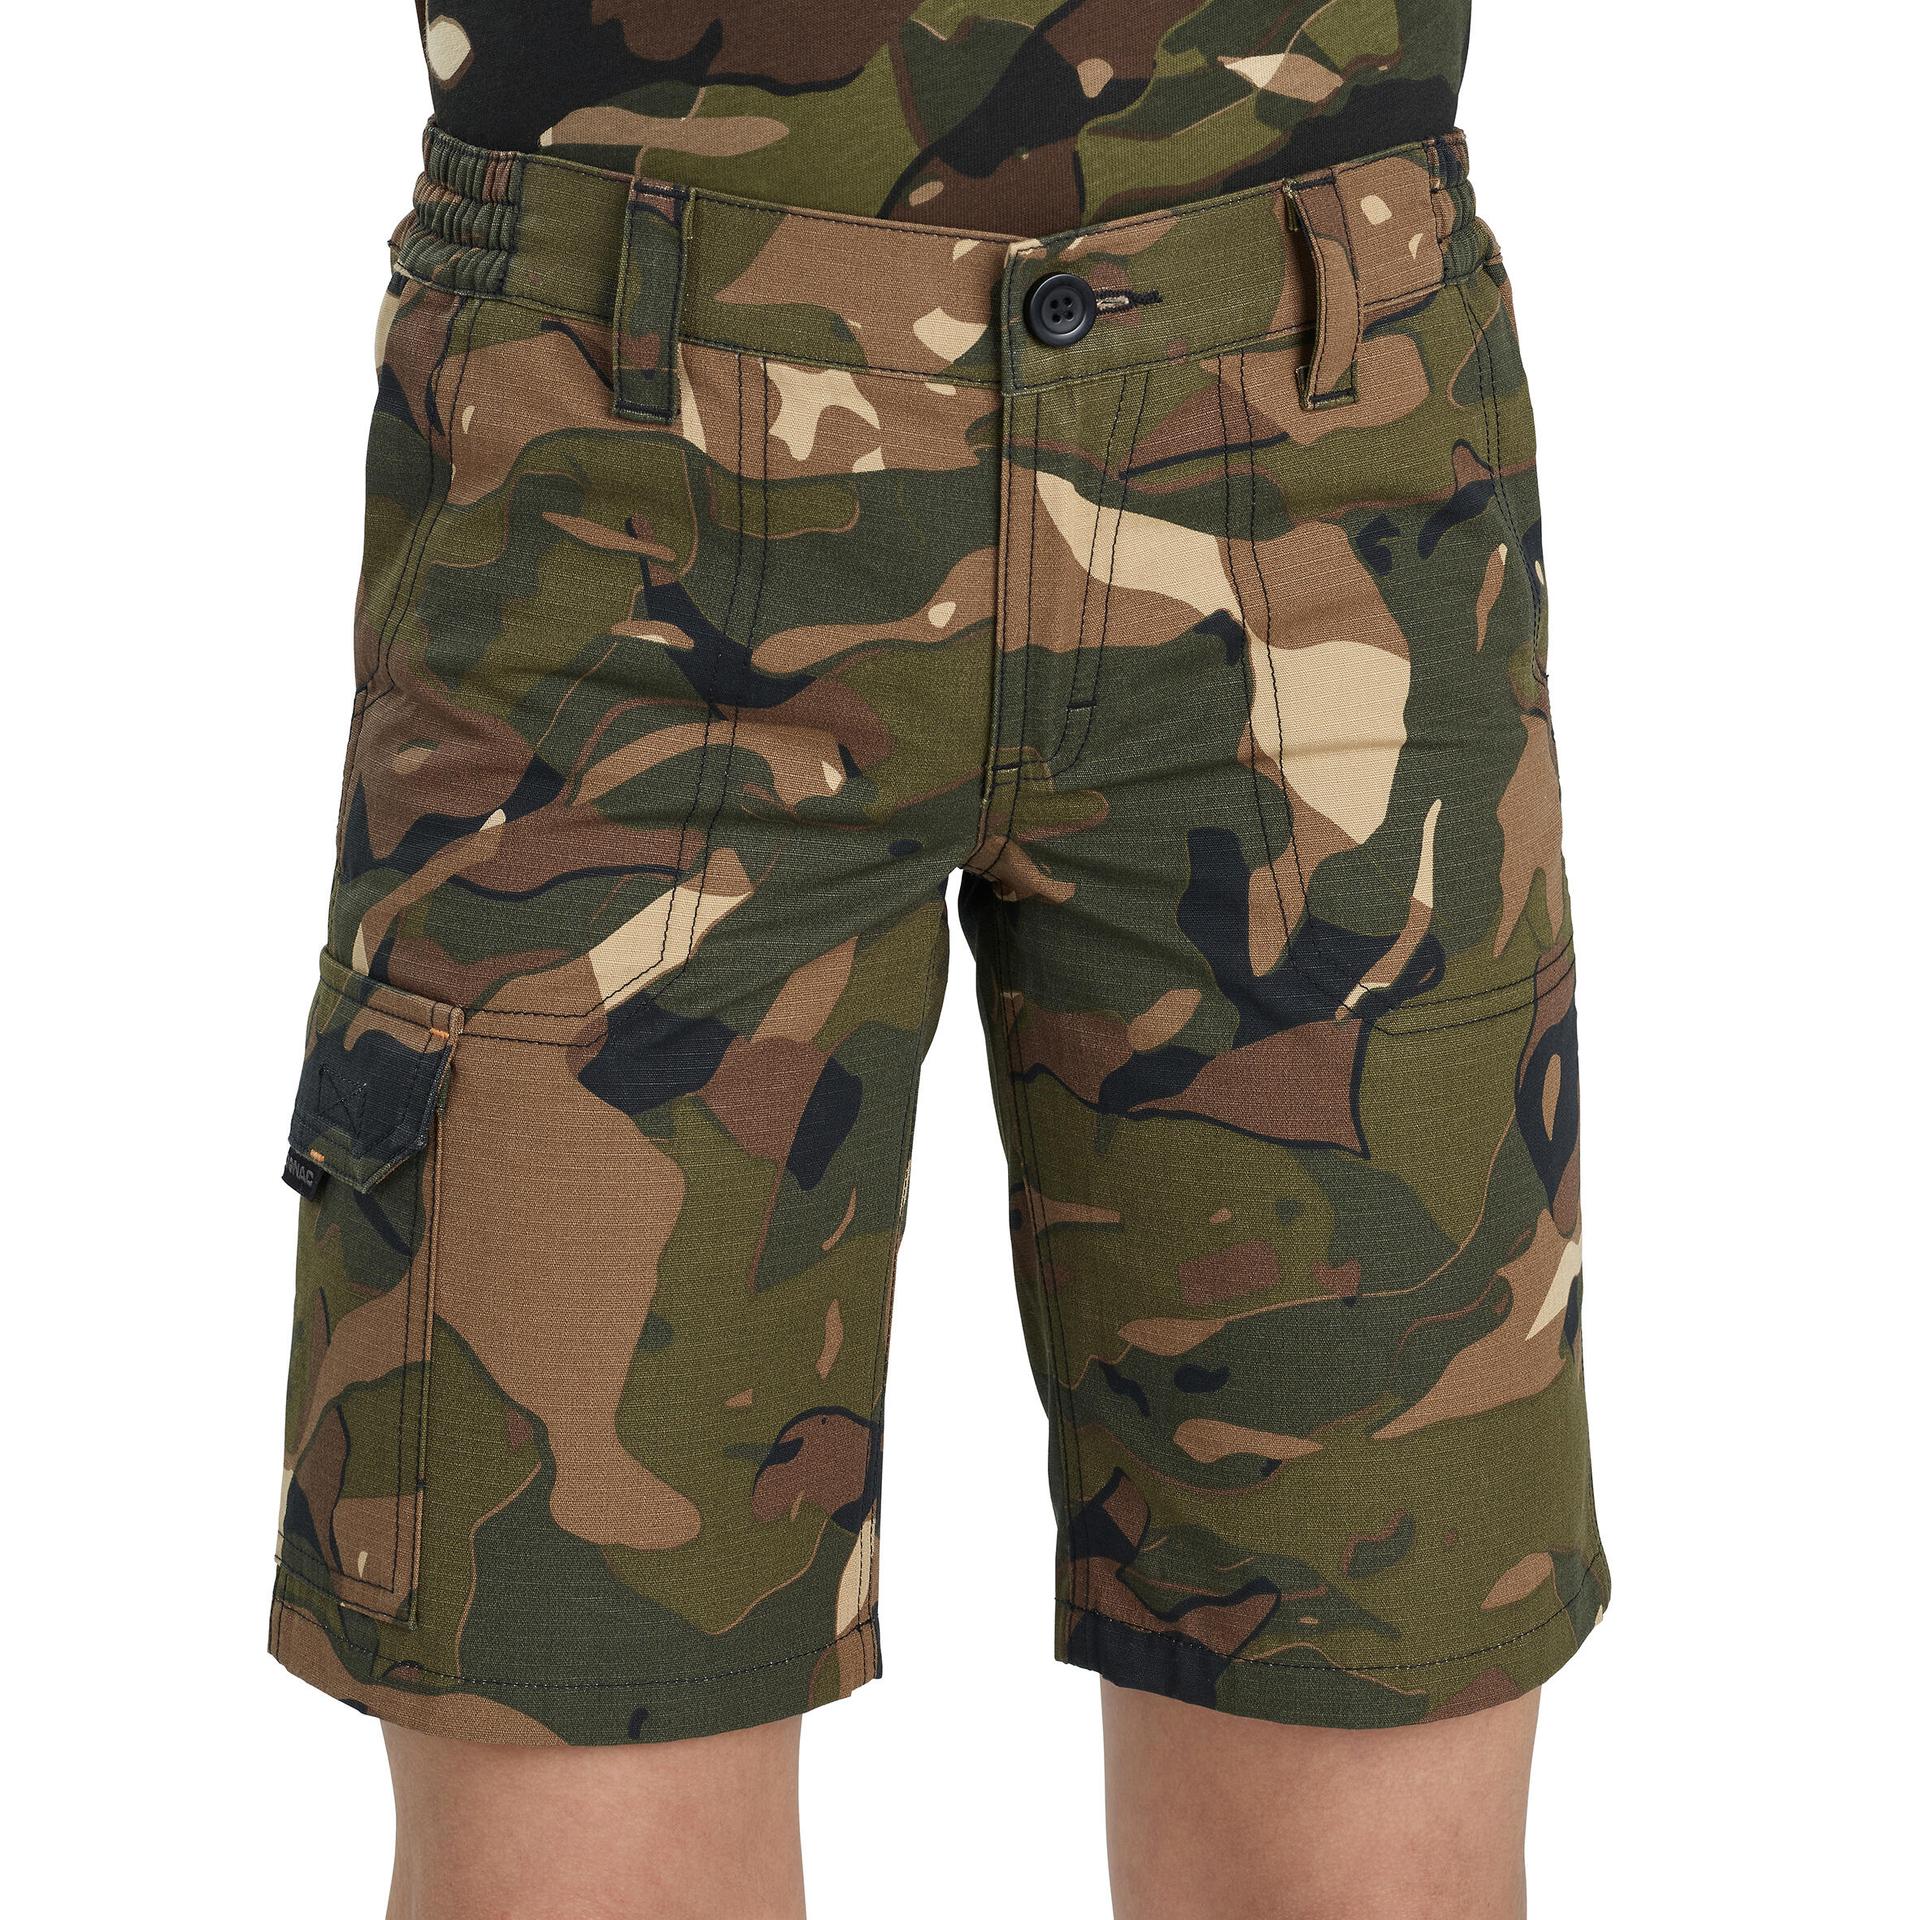 kids cargo bermuda shorts army military camo print 500 - camo green/brown